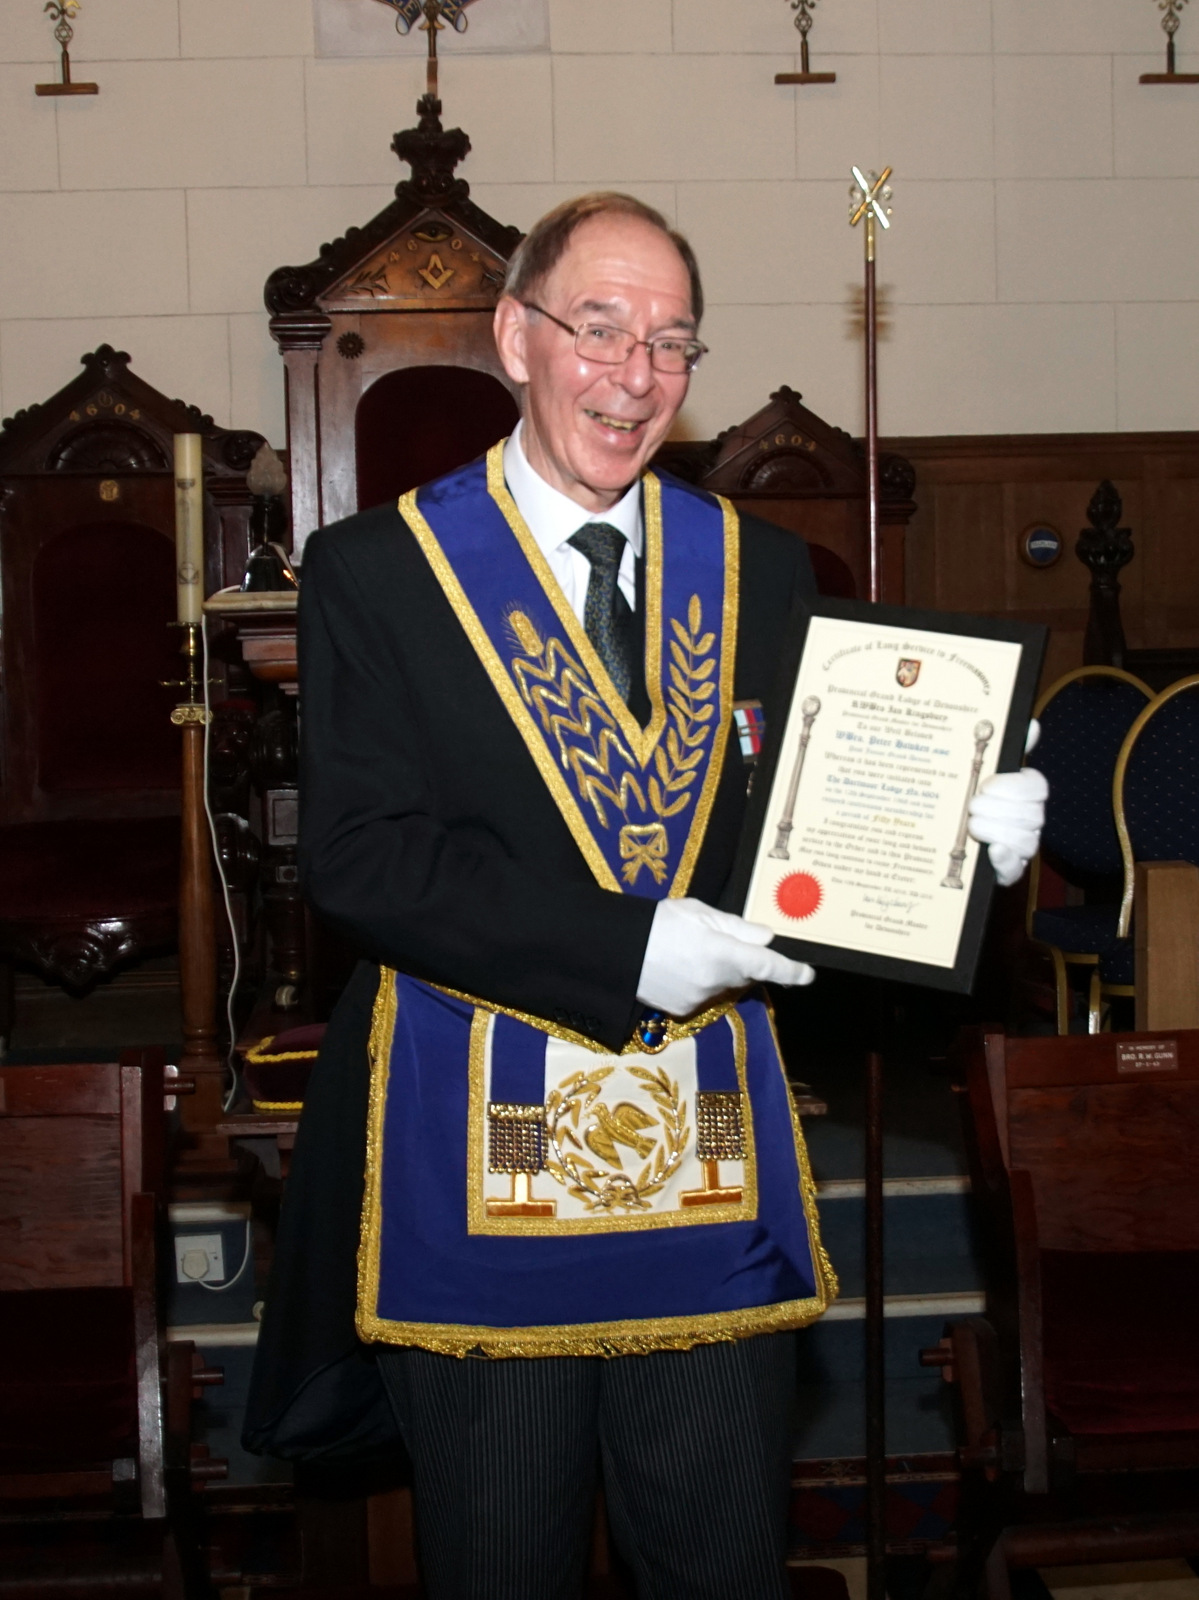 Peter Hawken displaying certificate